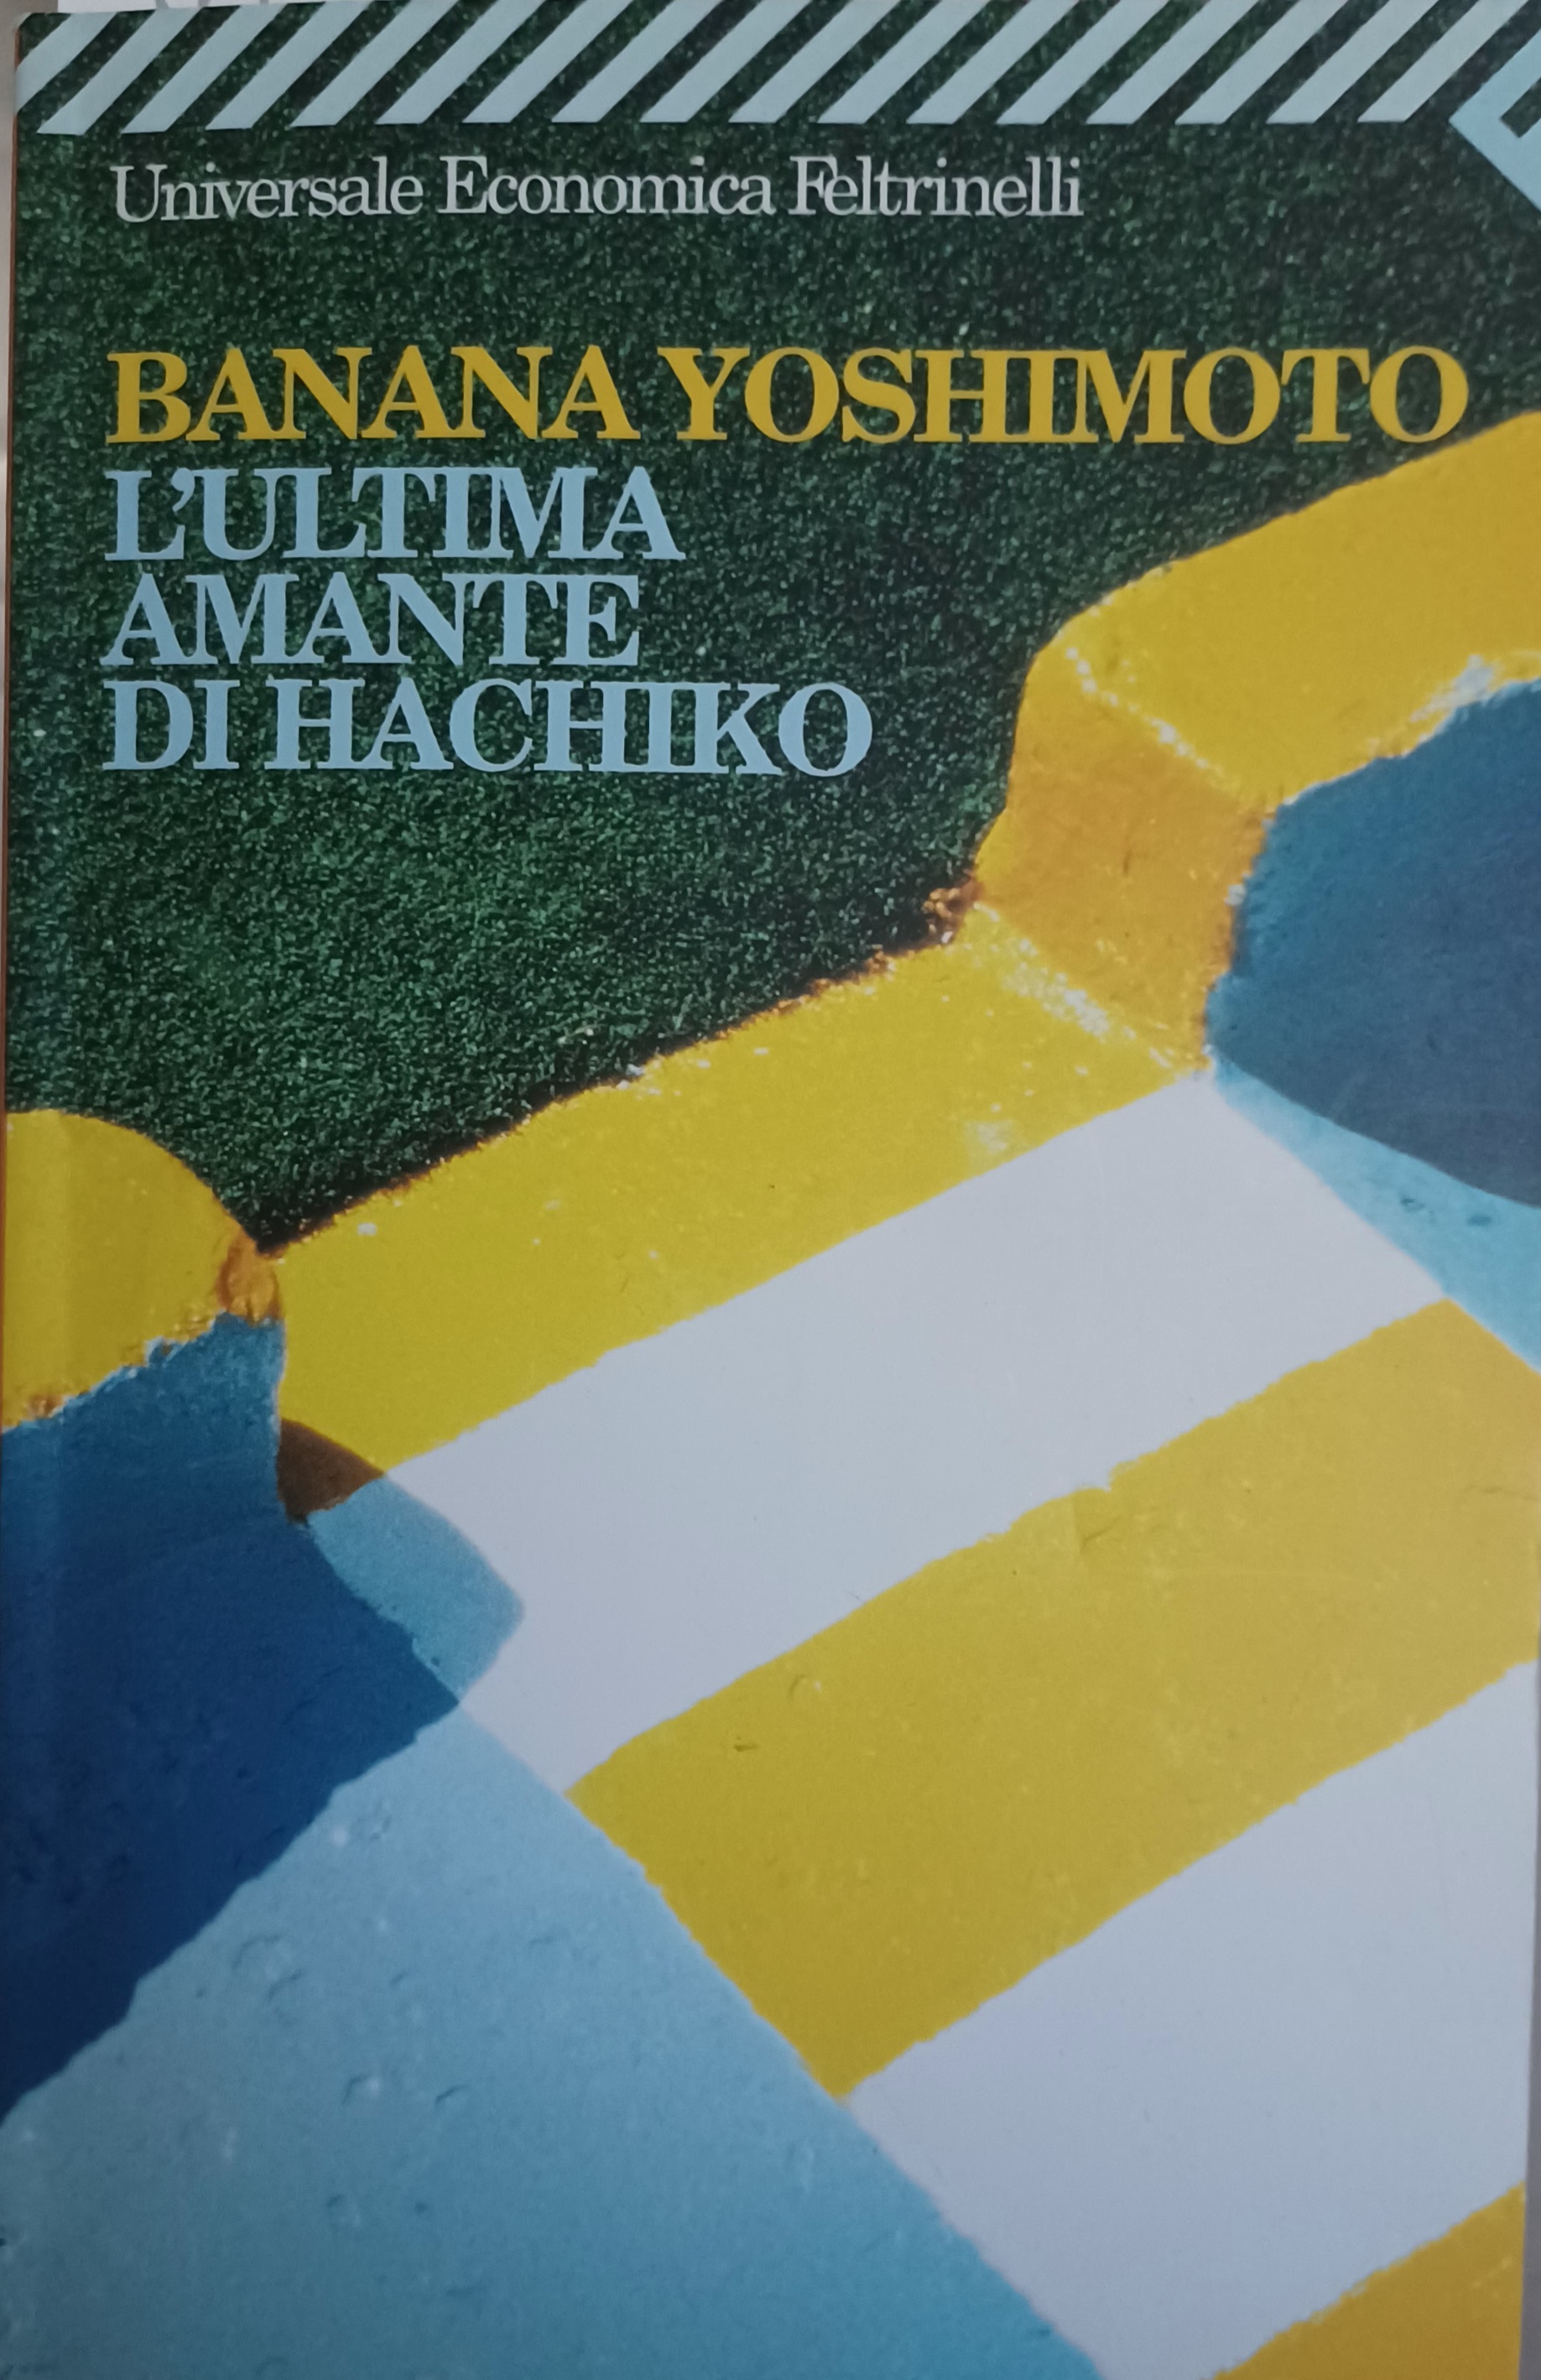 L'ultima amante di Hachiko (Japanese language, 1994)